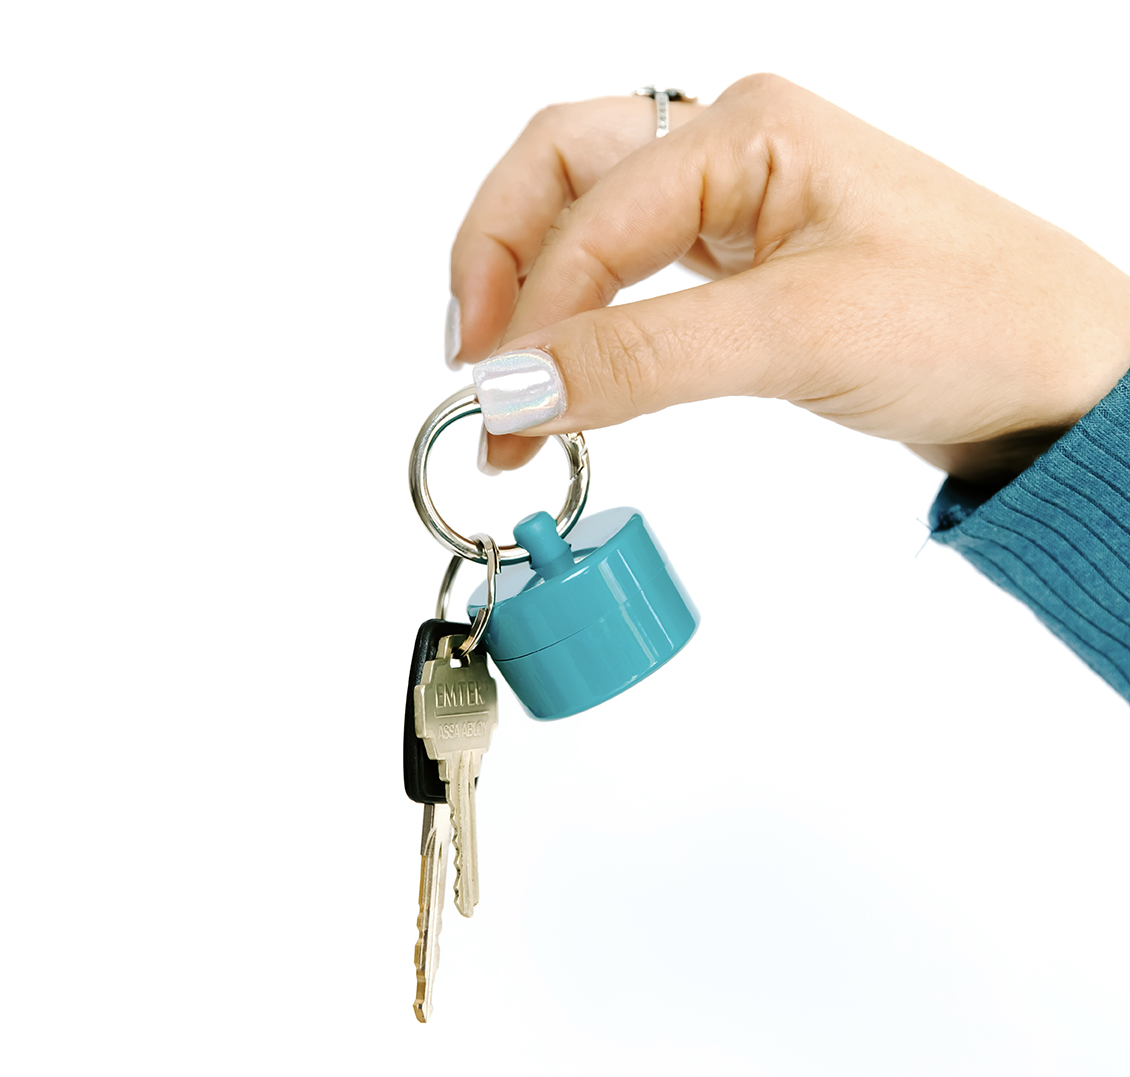 Keychain Ring Holder and Travel Ring Holder